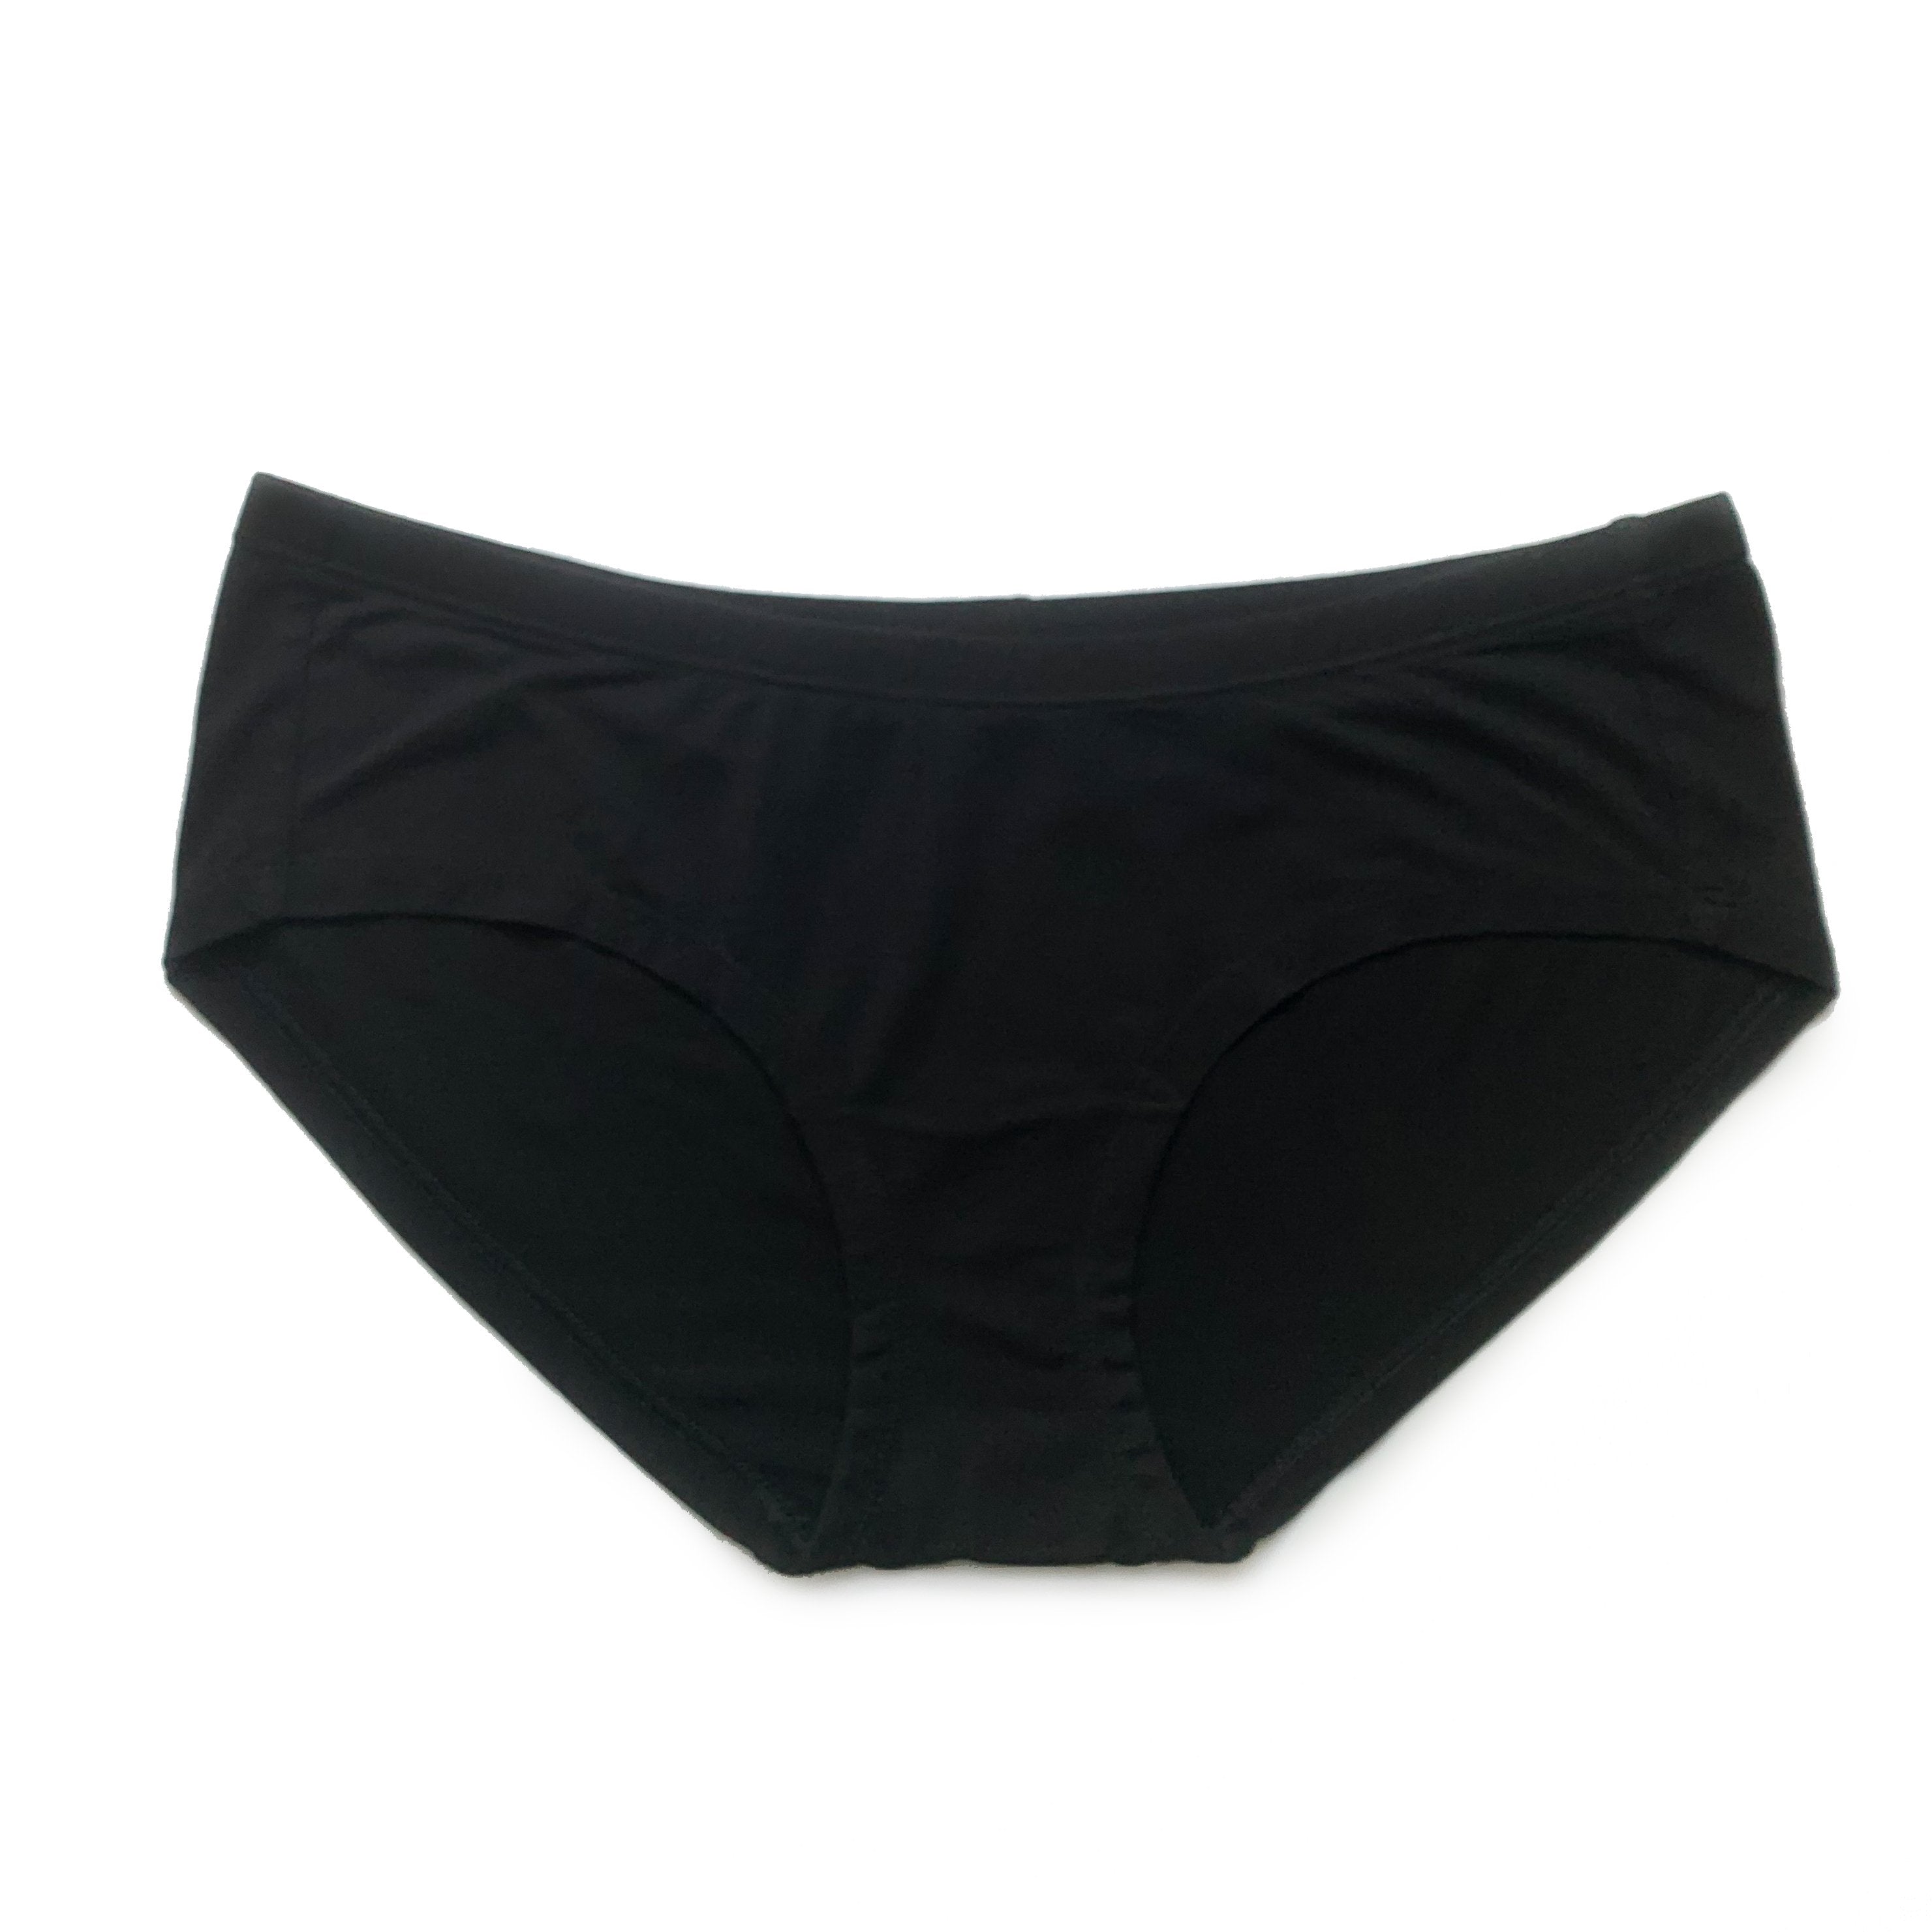 Slip ladies bamboo underwear, panties black retro